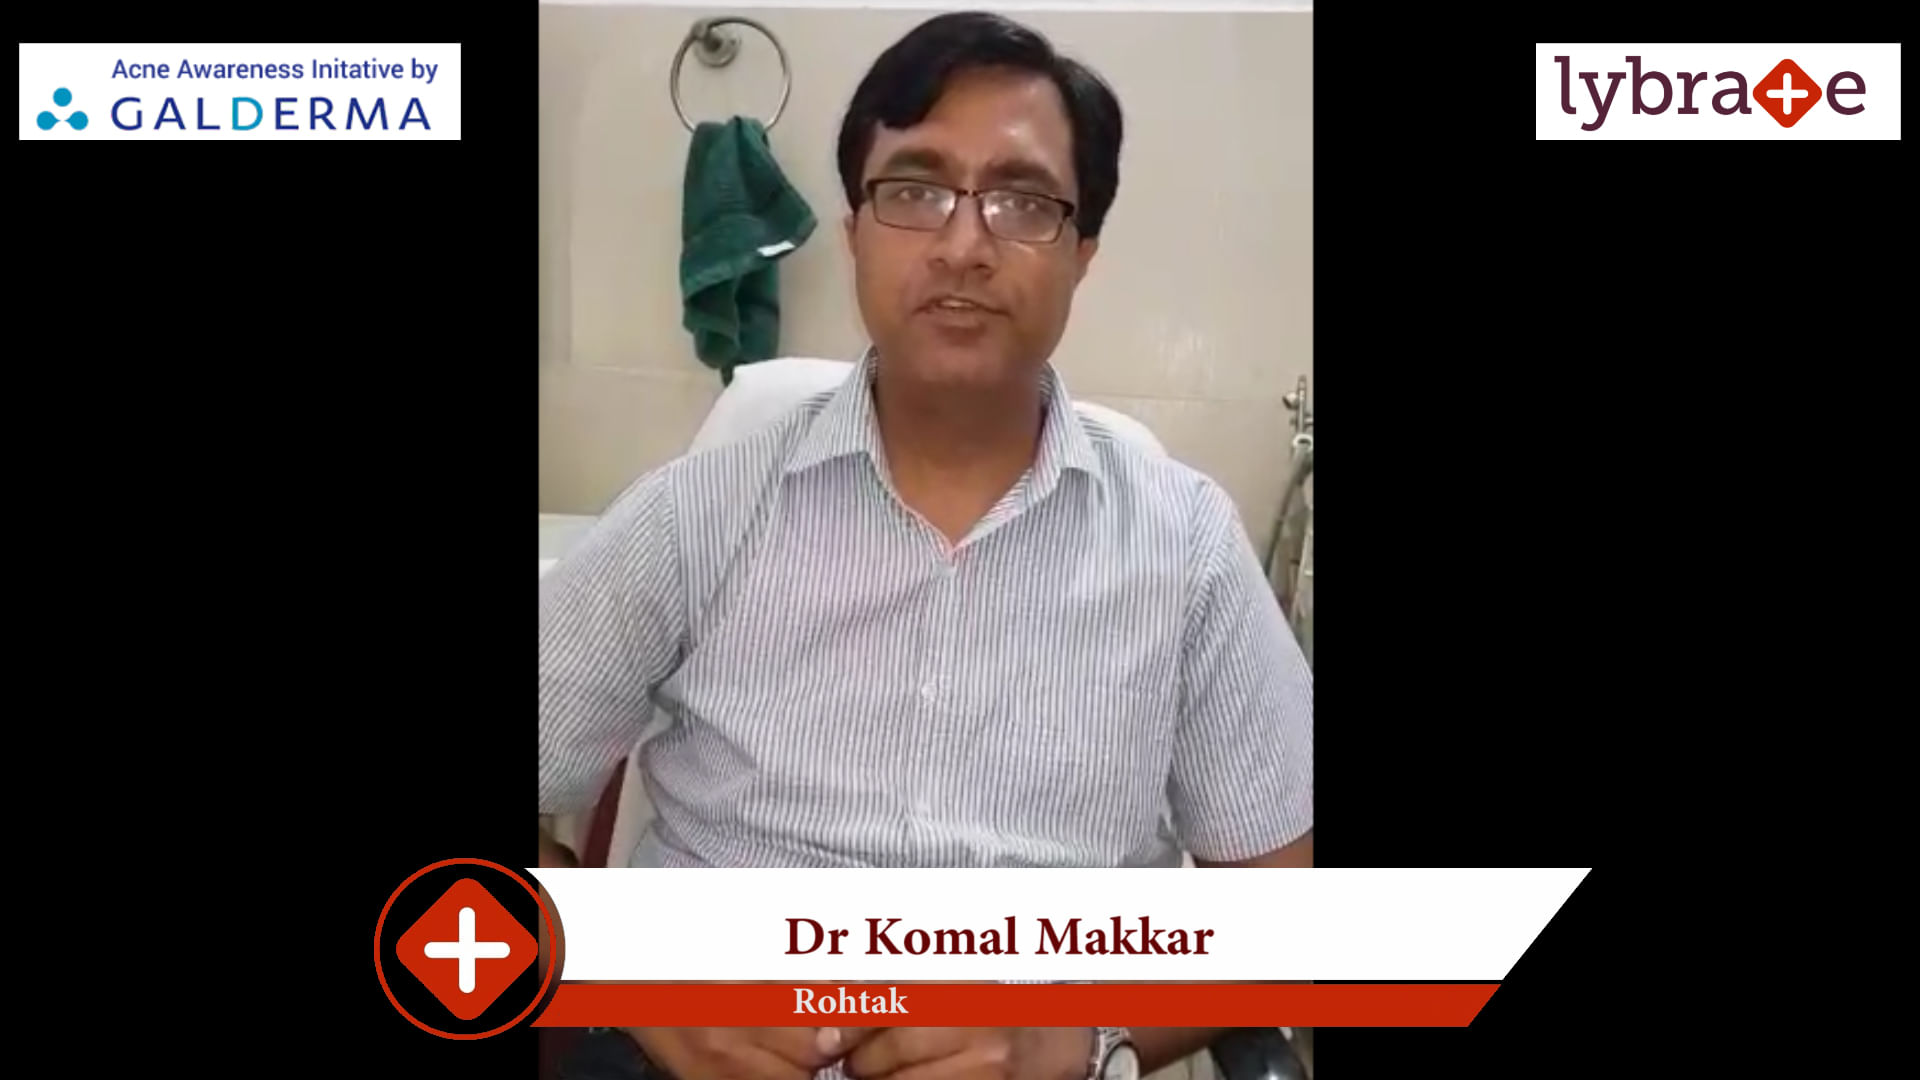 Lybrate | Dr. Komal Makkar speaks on IMPORTANCE OF TREATING ACNE EARLY